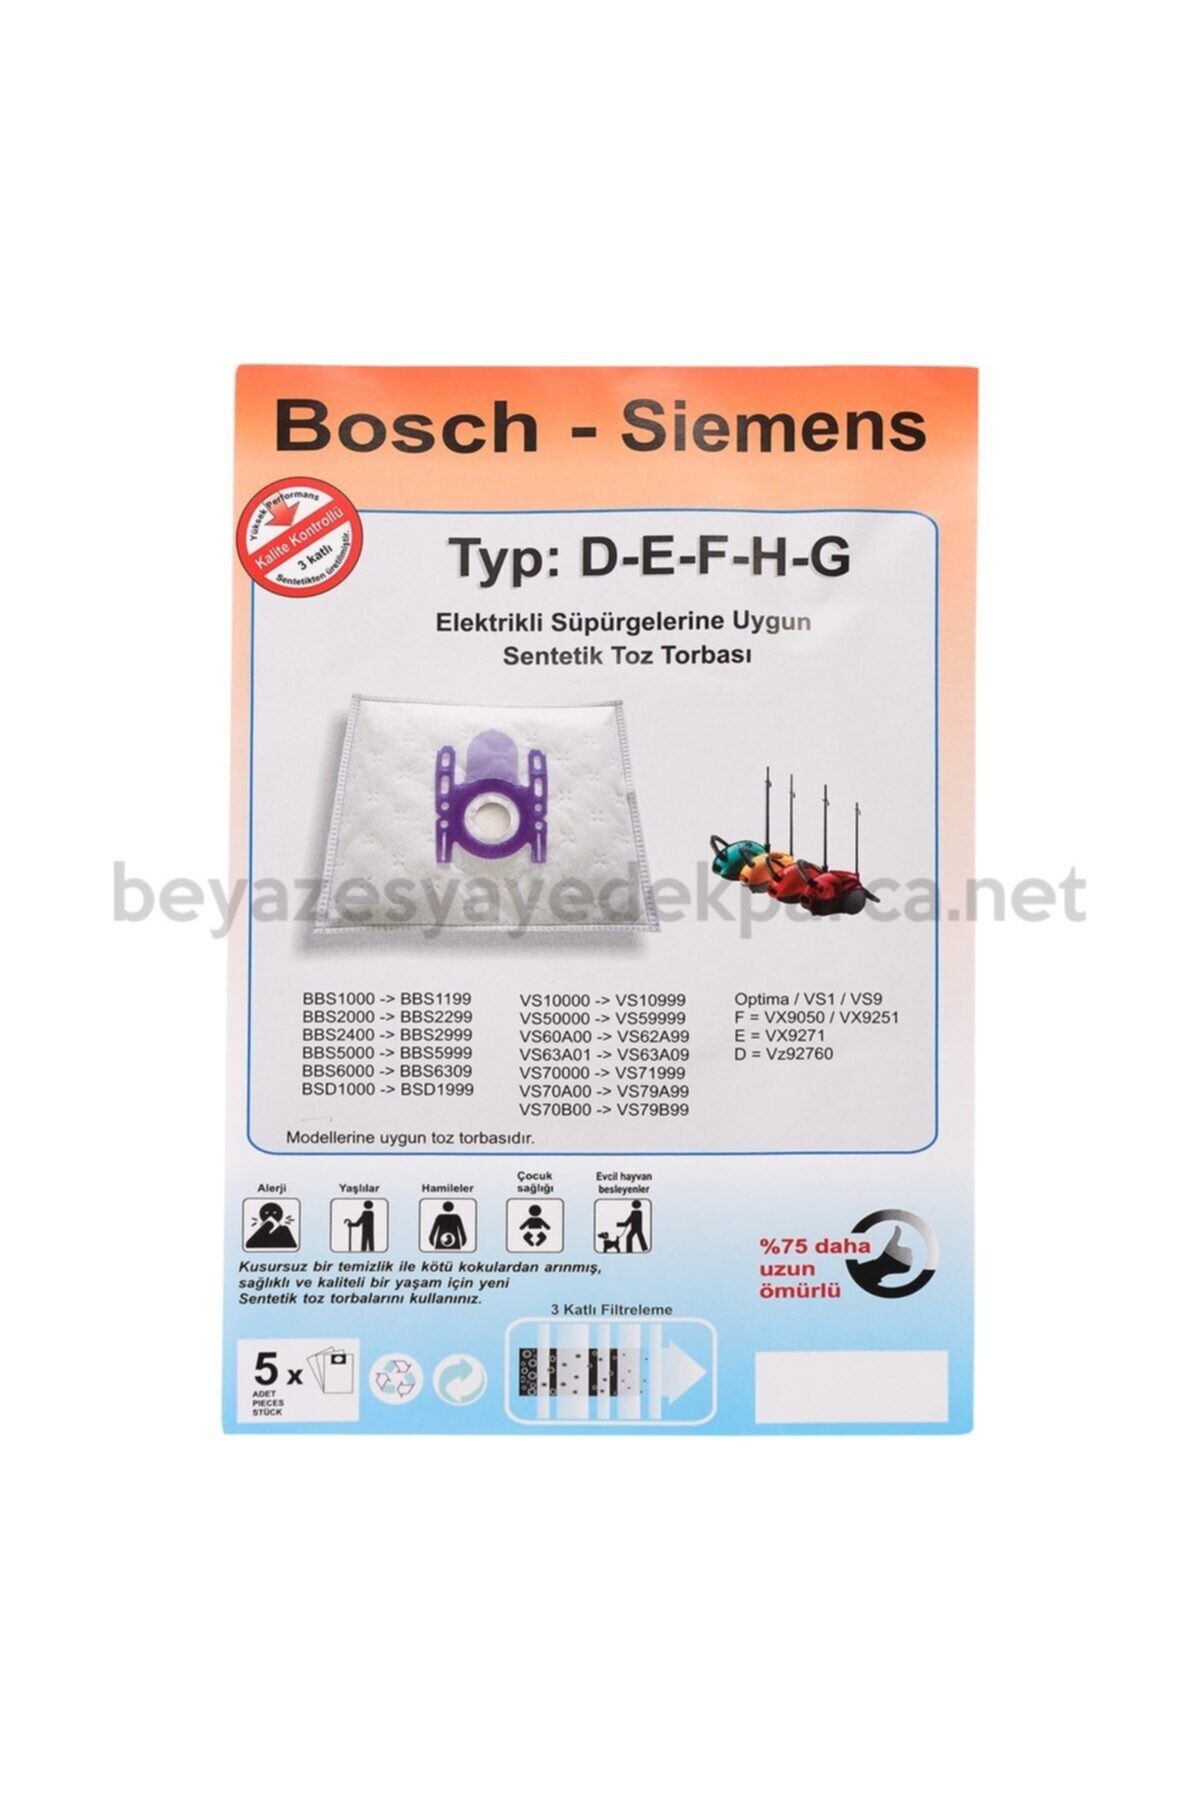 Bosch -siemens Tip D-e-f-h-g Bez Elektrikli Süpürge Torbası (20 Adet)